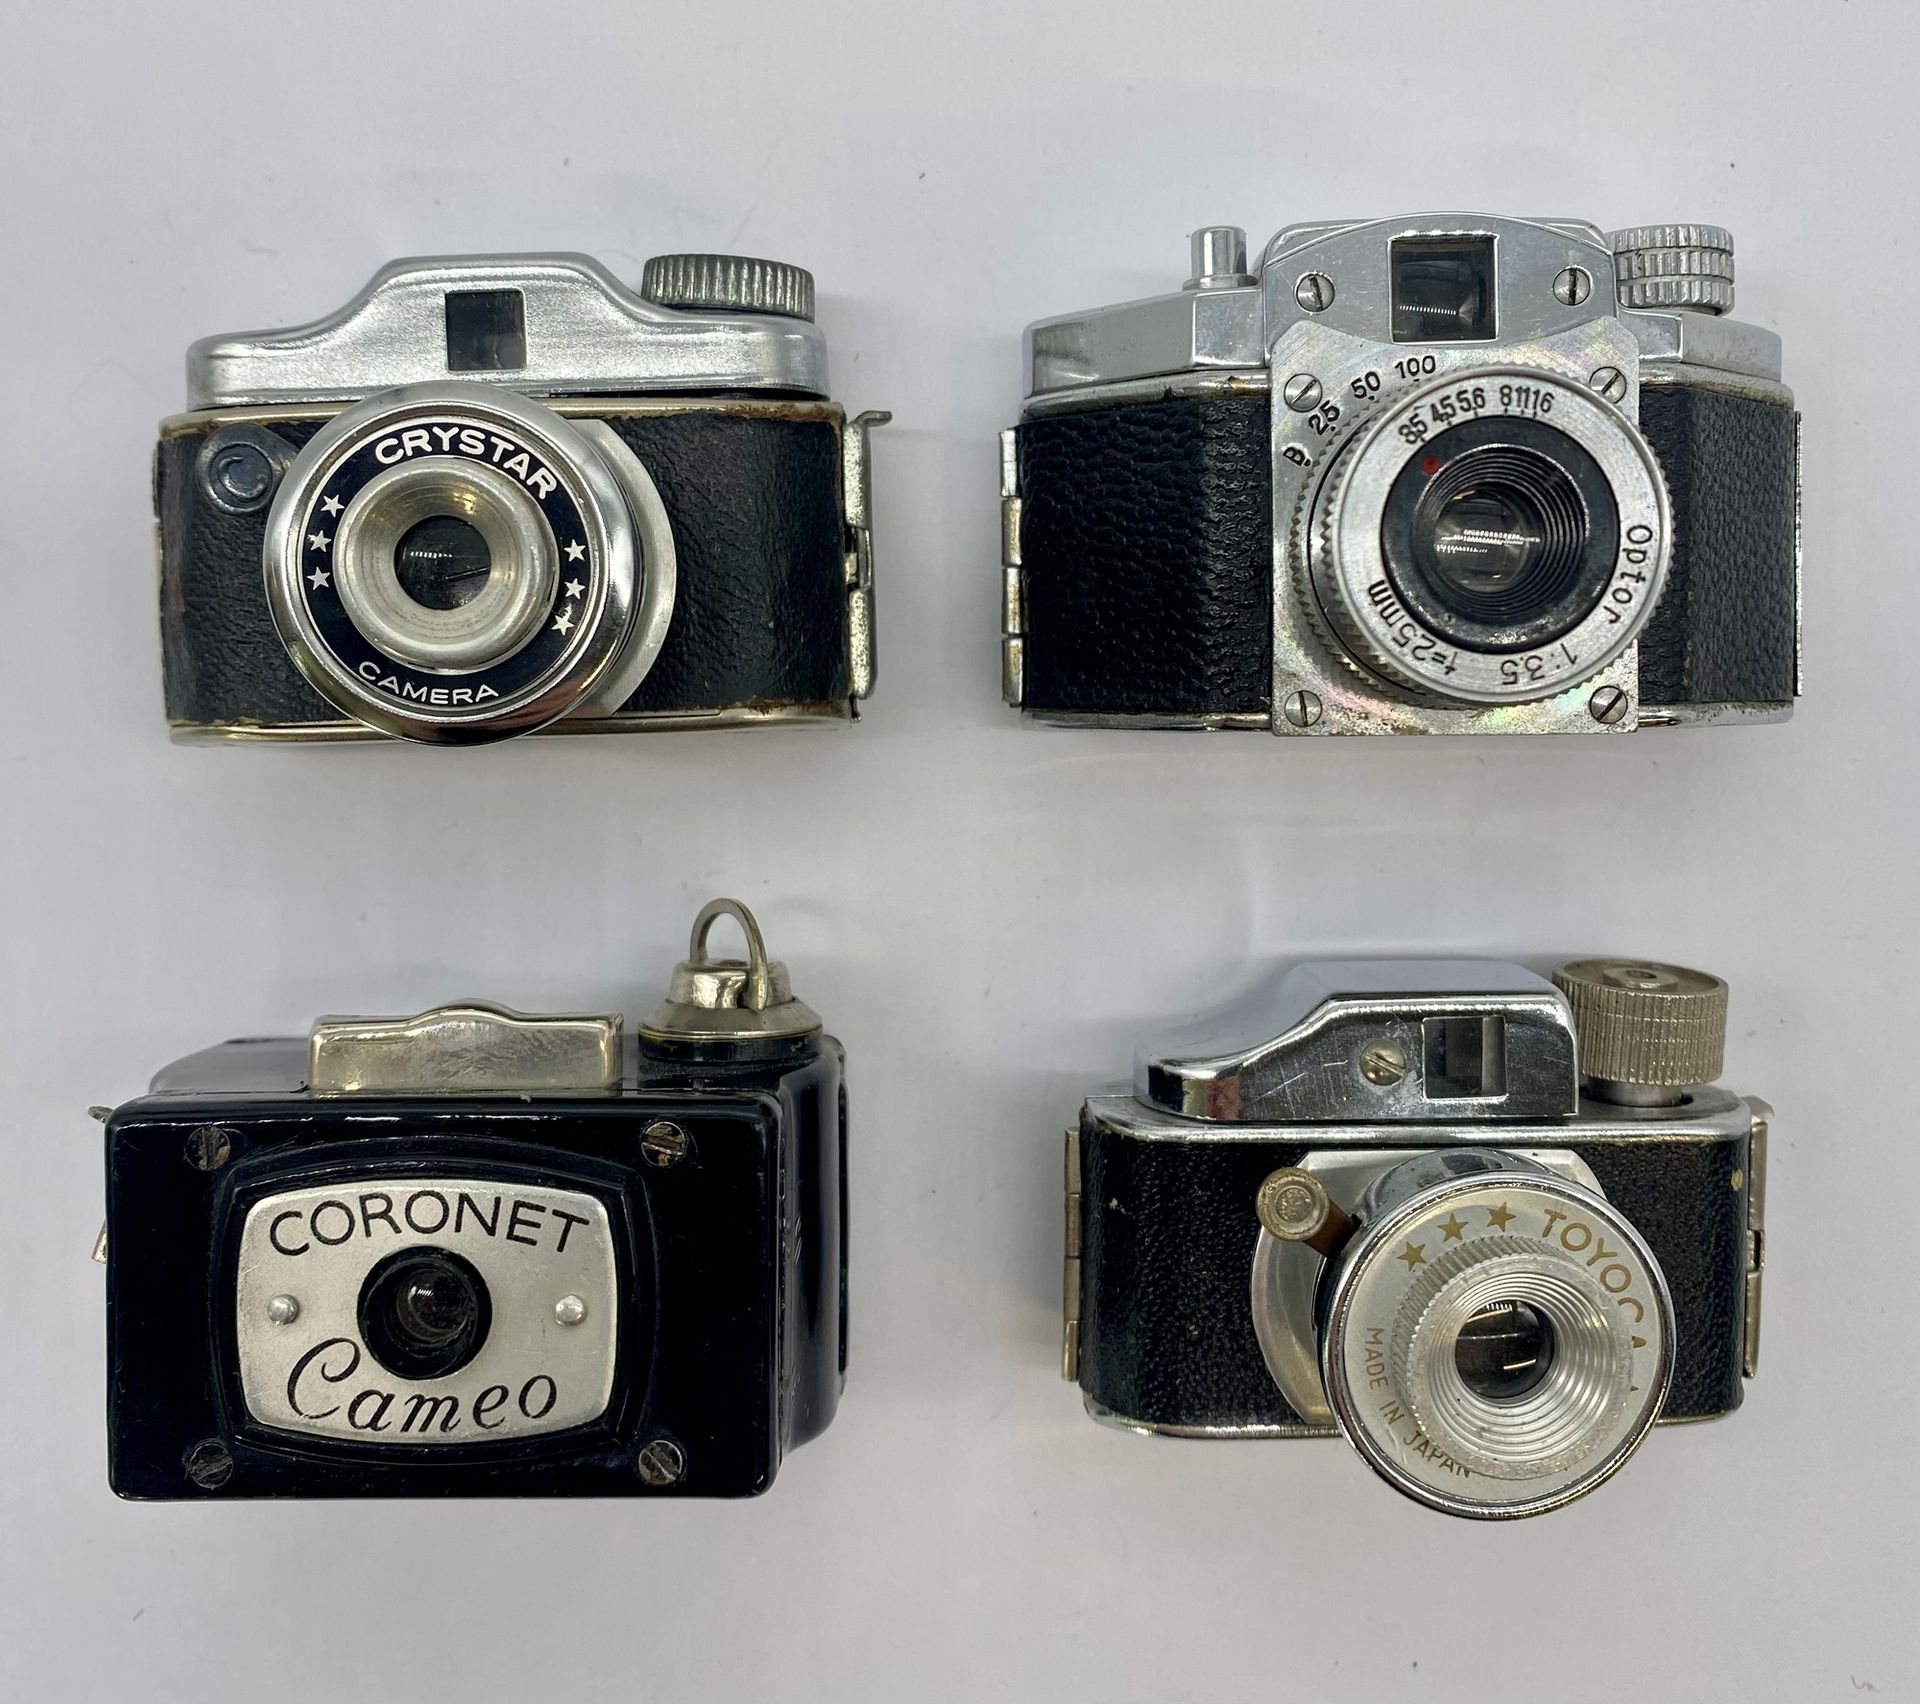 Null 一套四台微型摄像机

- 迅捷

- 晶体

- 冕下

- 托奥卡